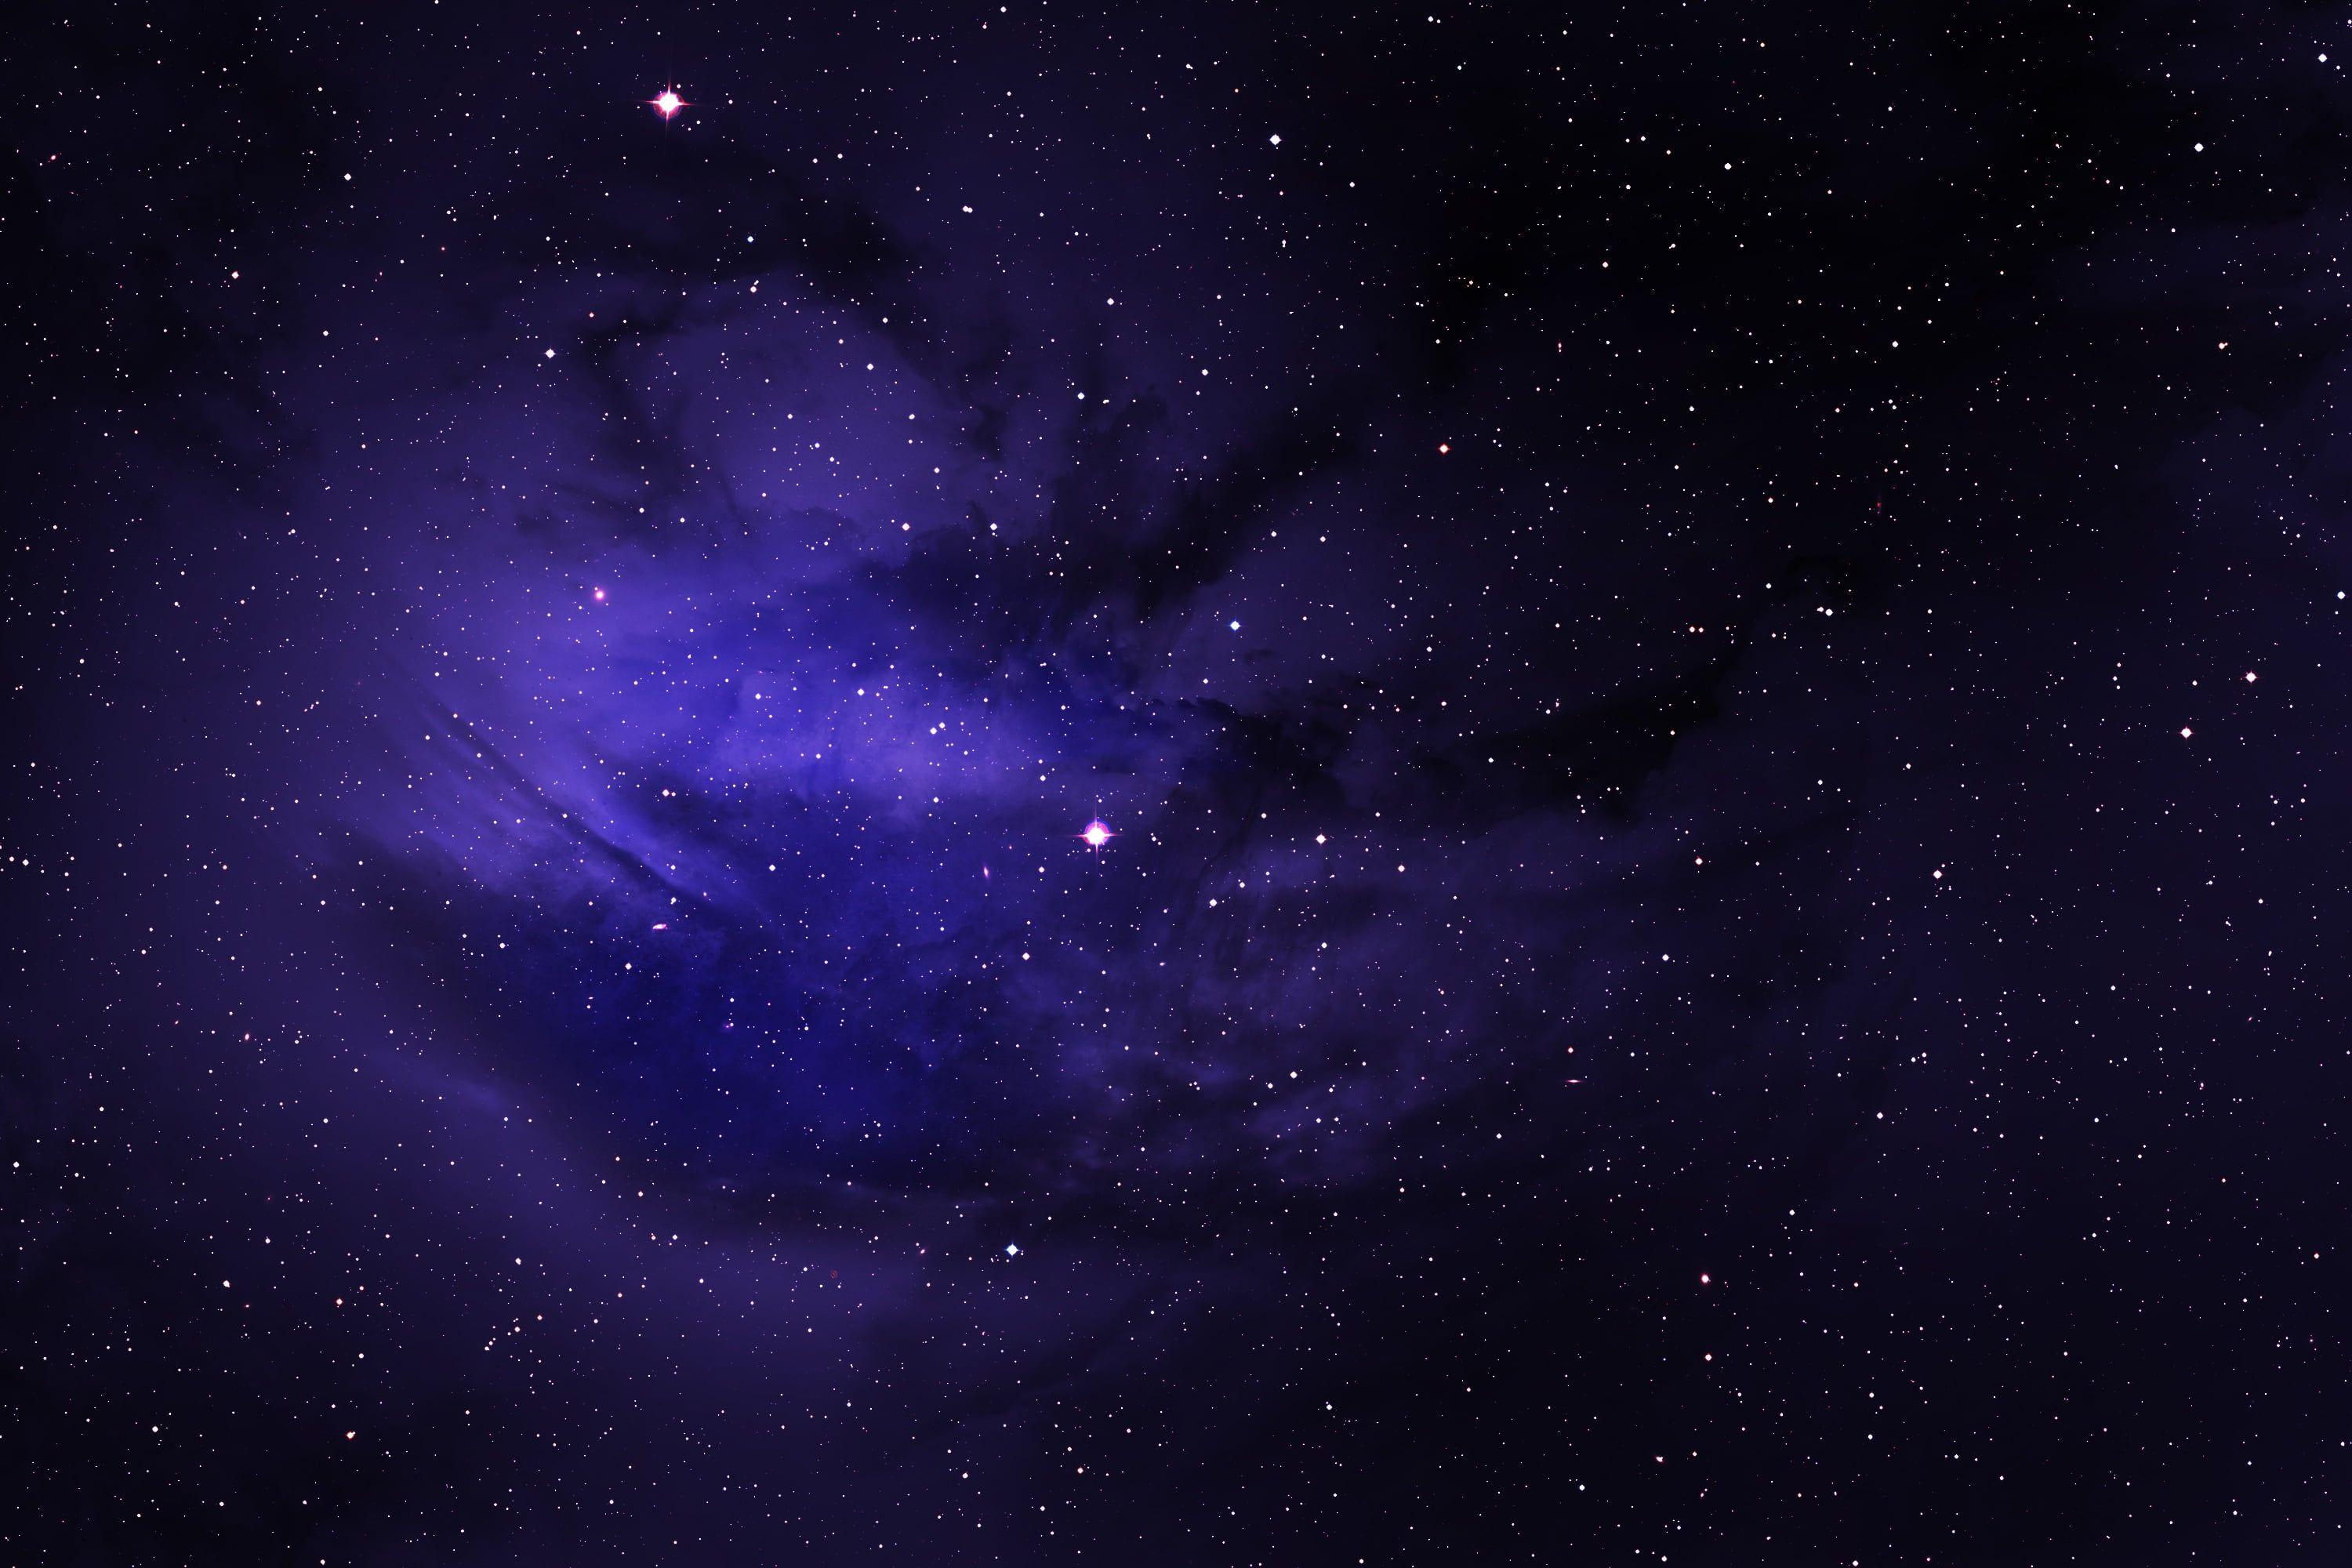 Dark Blue Galaxy Wallpapers Top Free Dark Blue Galaxy Backgrounds